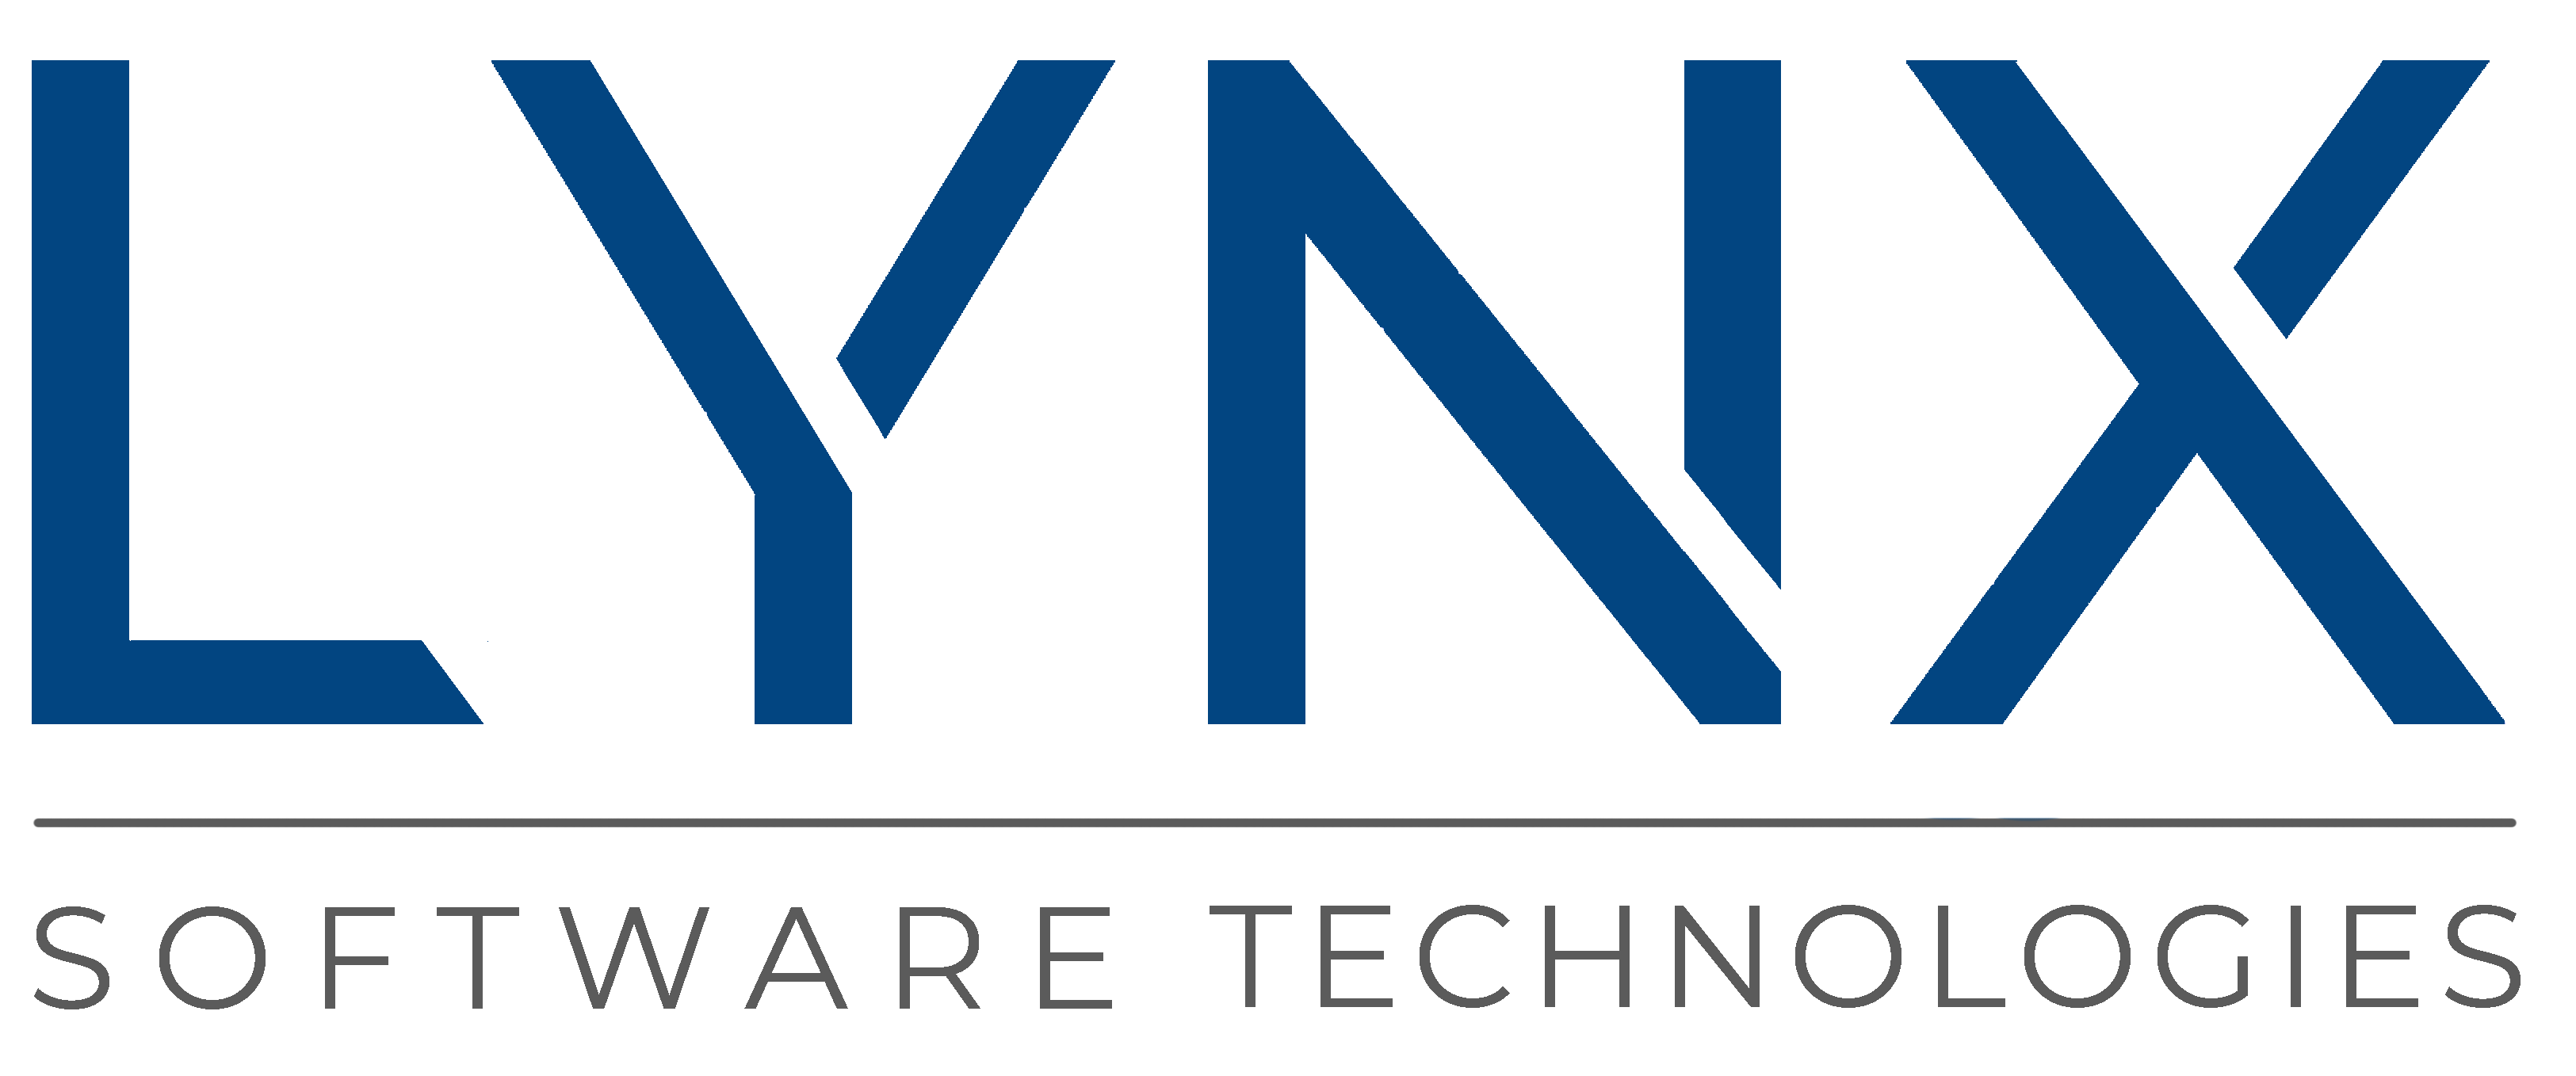 LYNX_logo_PNG_file_vertical_orientation_024581-2